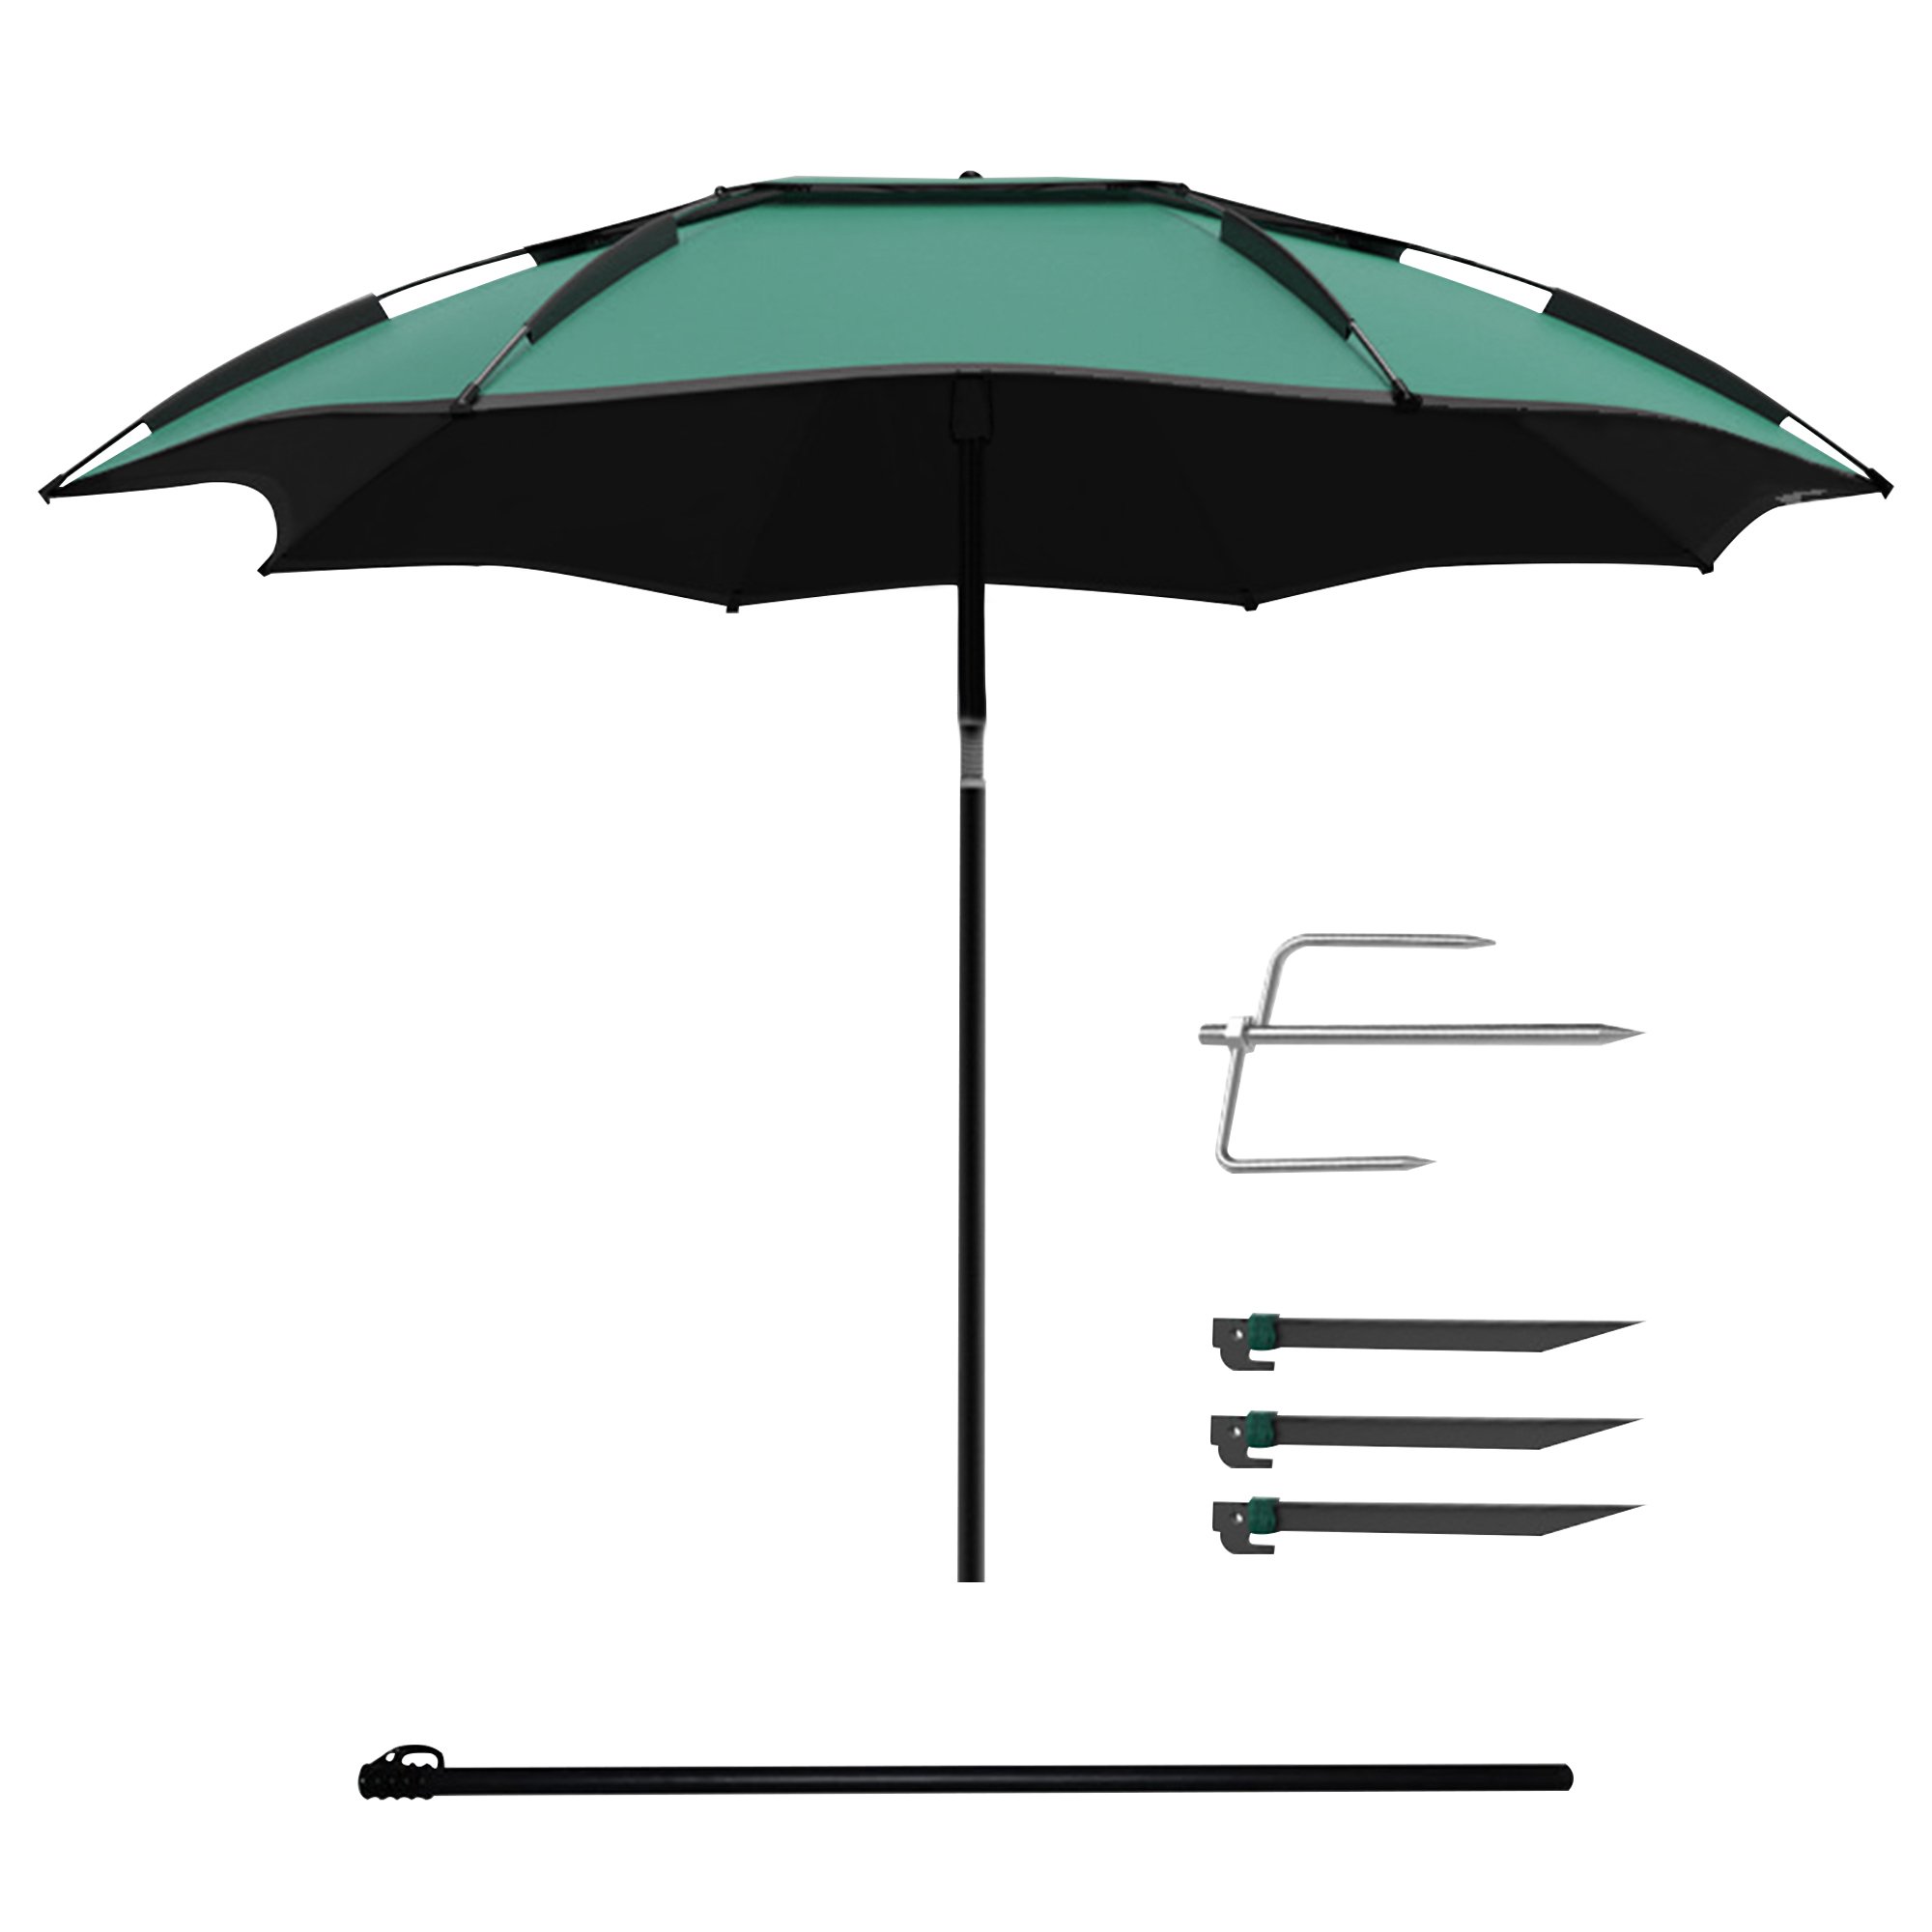 2.2m Double Layer Outdoor Folding Umbrella